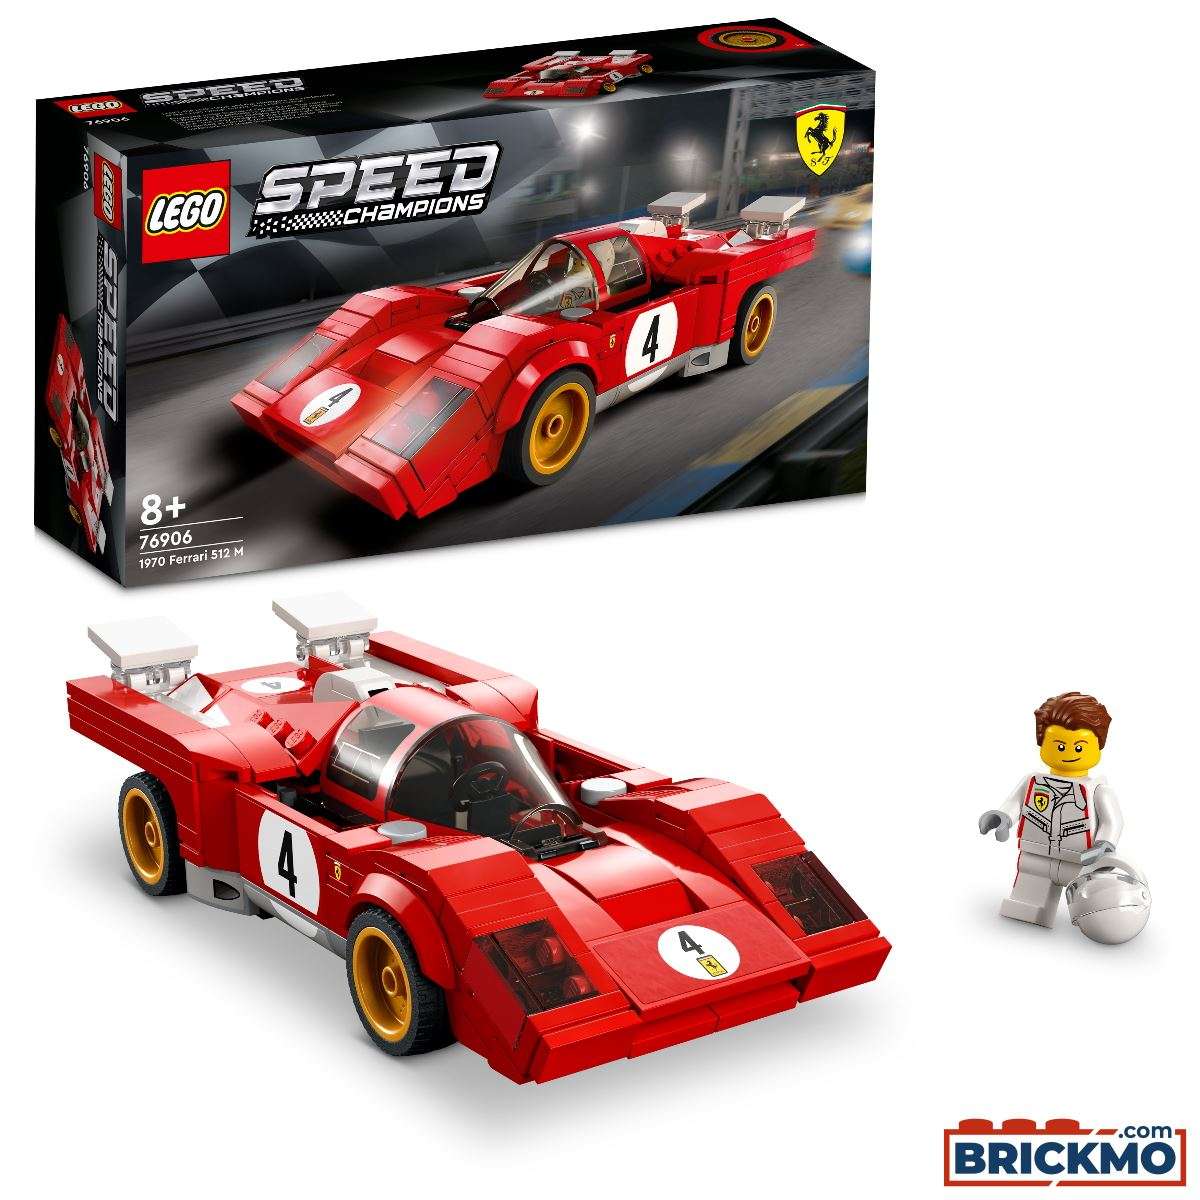 LEGO Speed Champions 76906 1970 Ferrari 512 M 76906